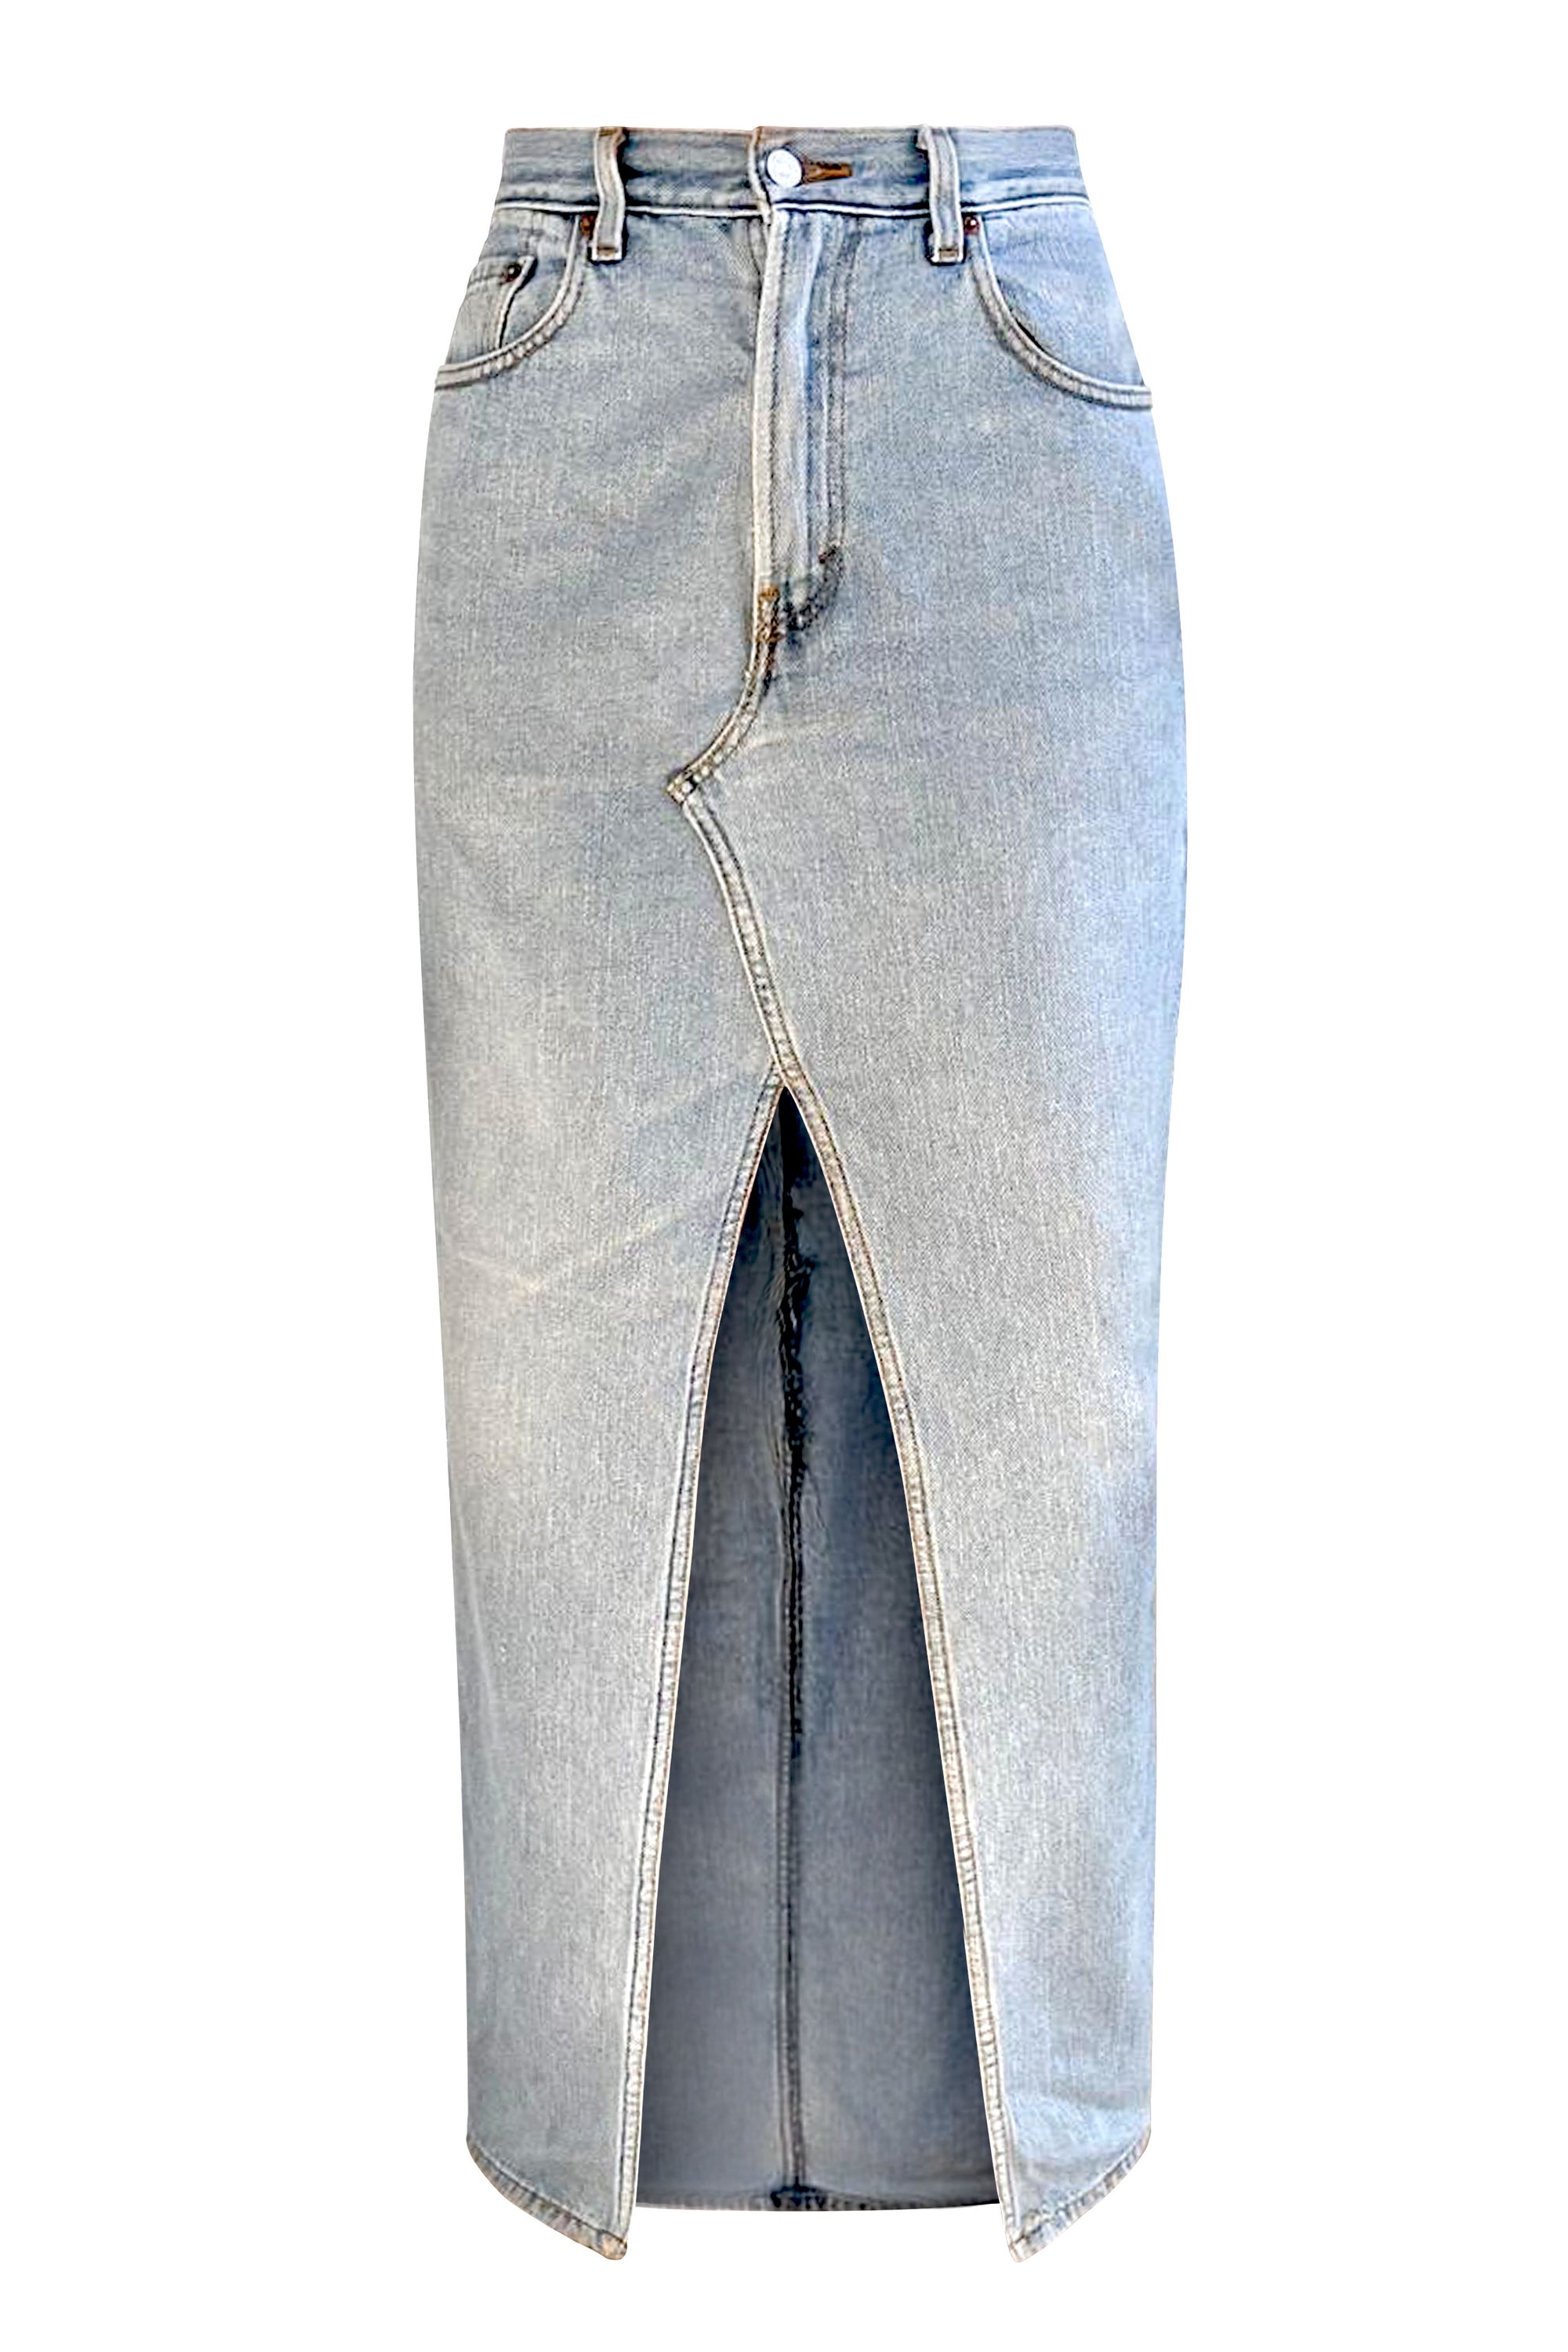 TG Vintage Black Levi Tie Dye Jean, 30 by Sorella Boutique